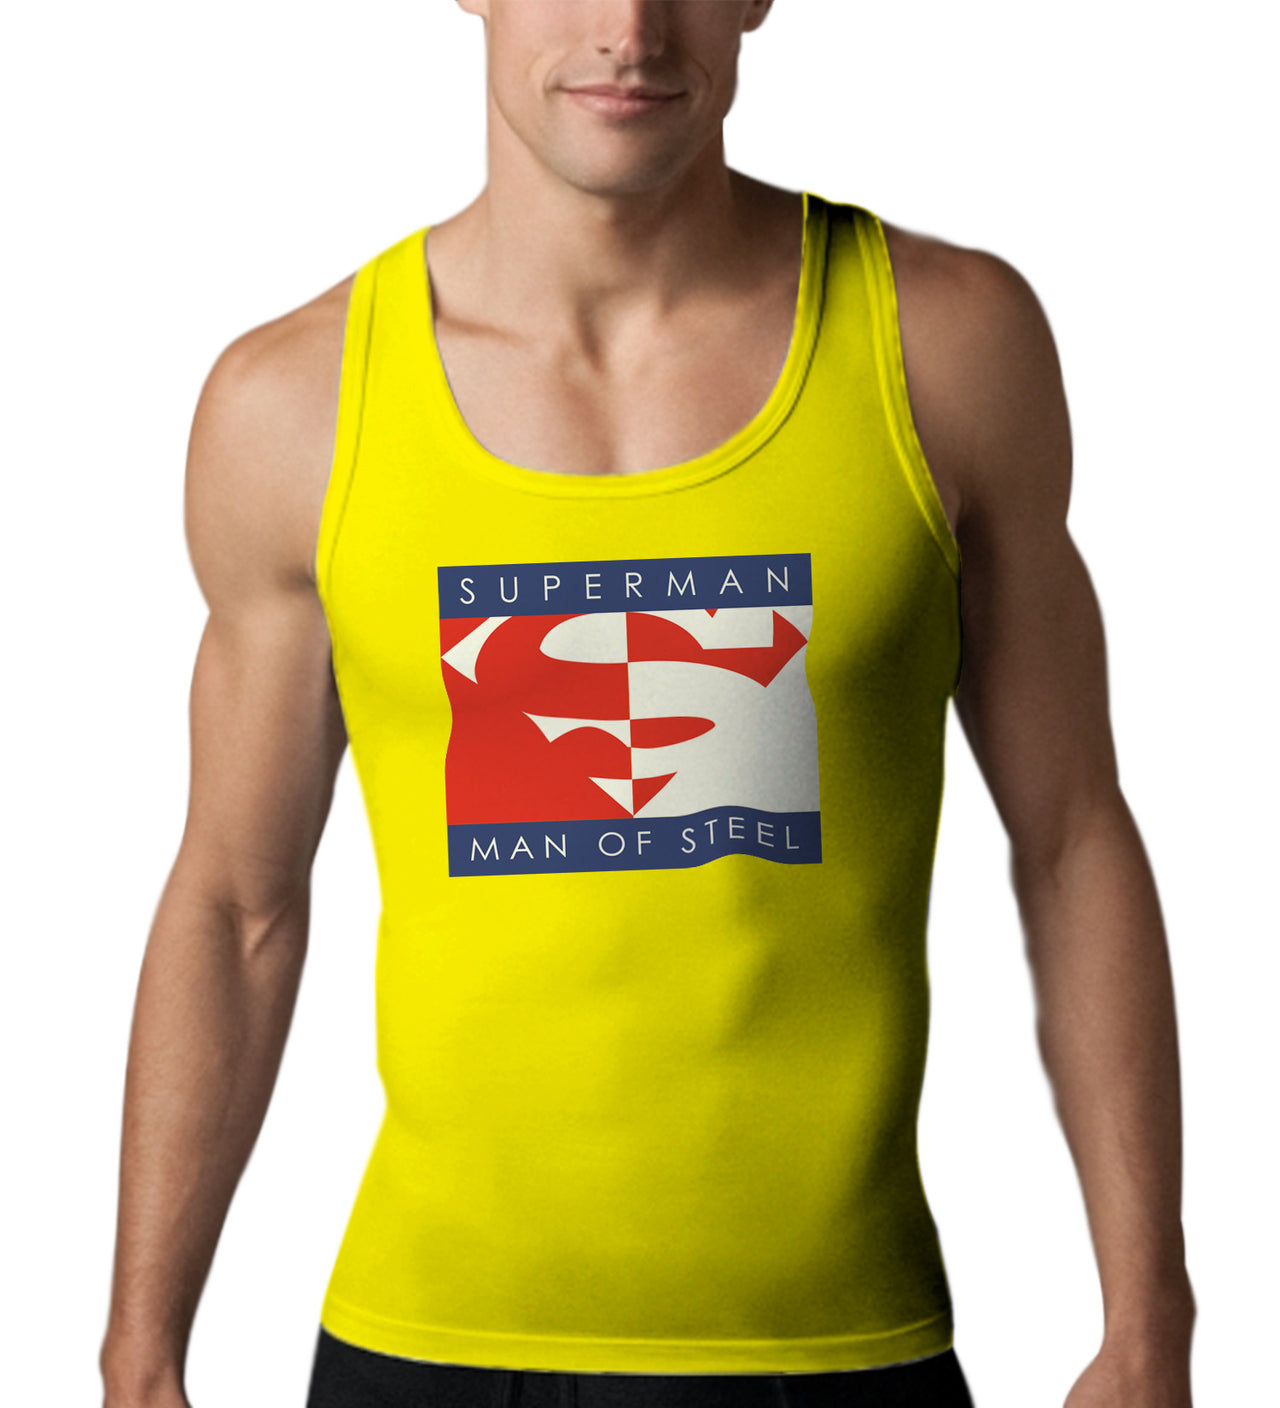 Superman Man Of Steel Block Logo on Yellow Tank top for Men - TshirtNow.net - 1